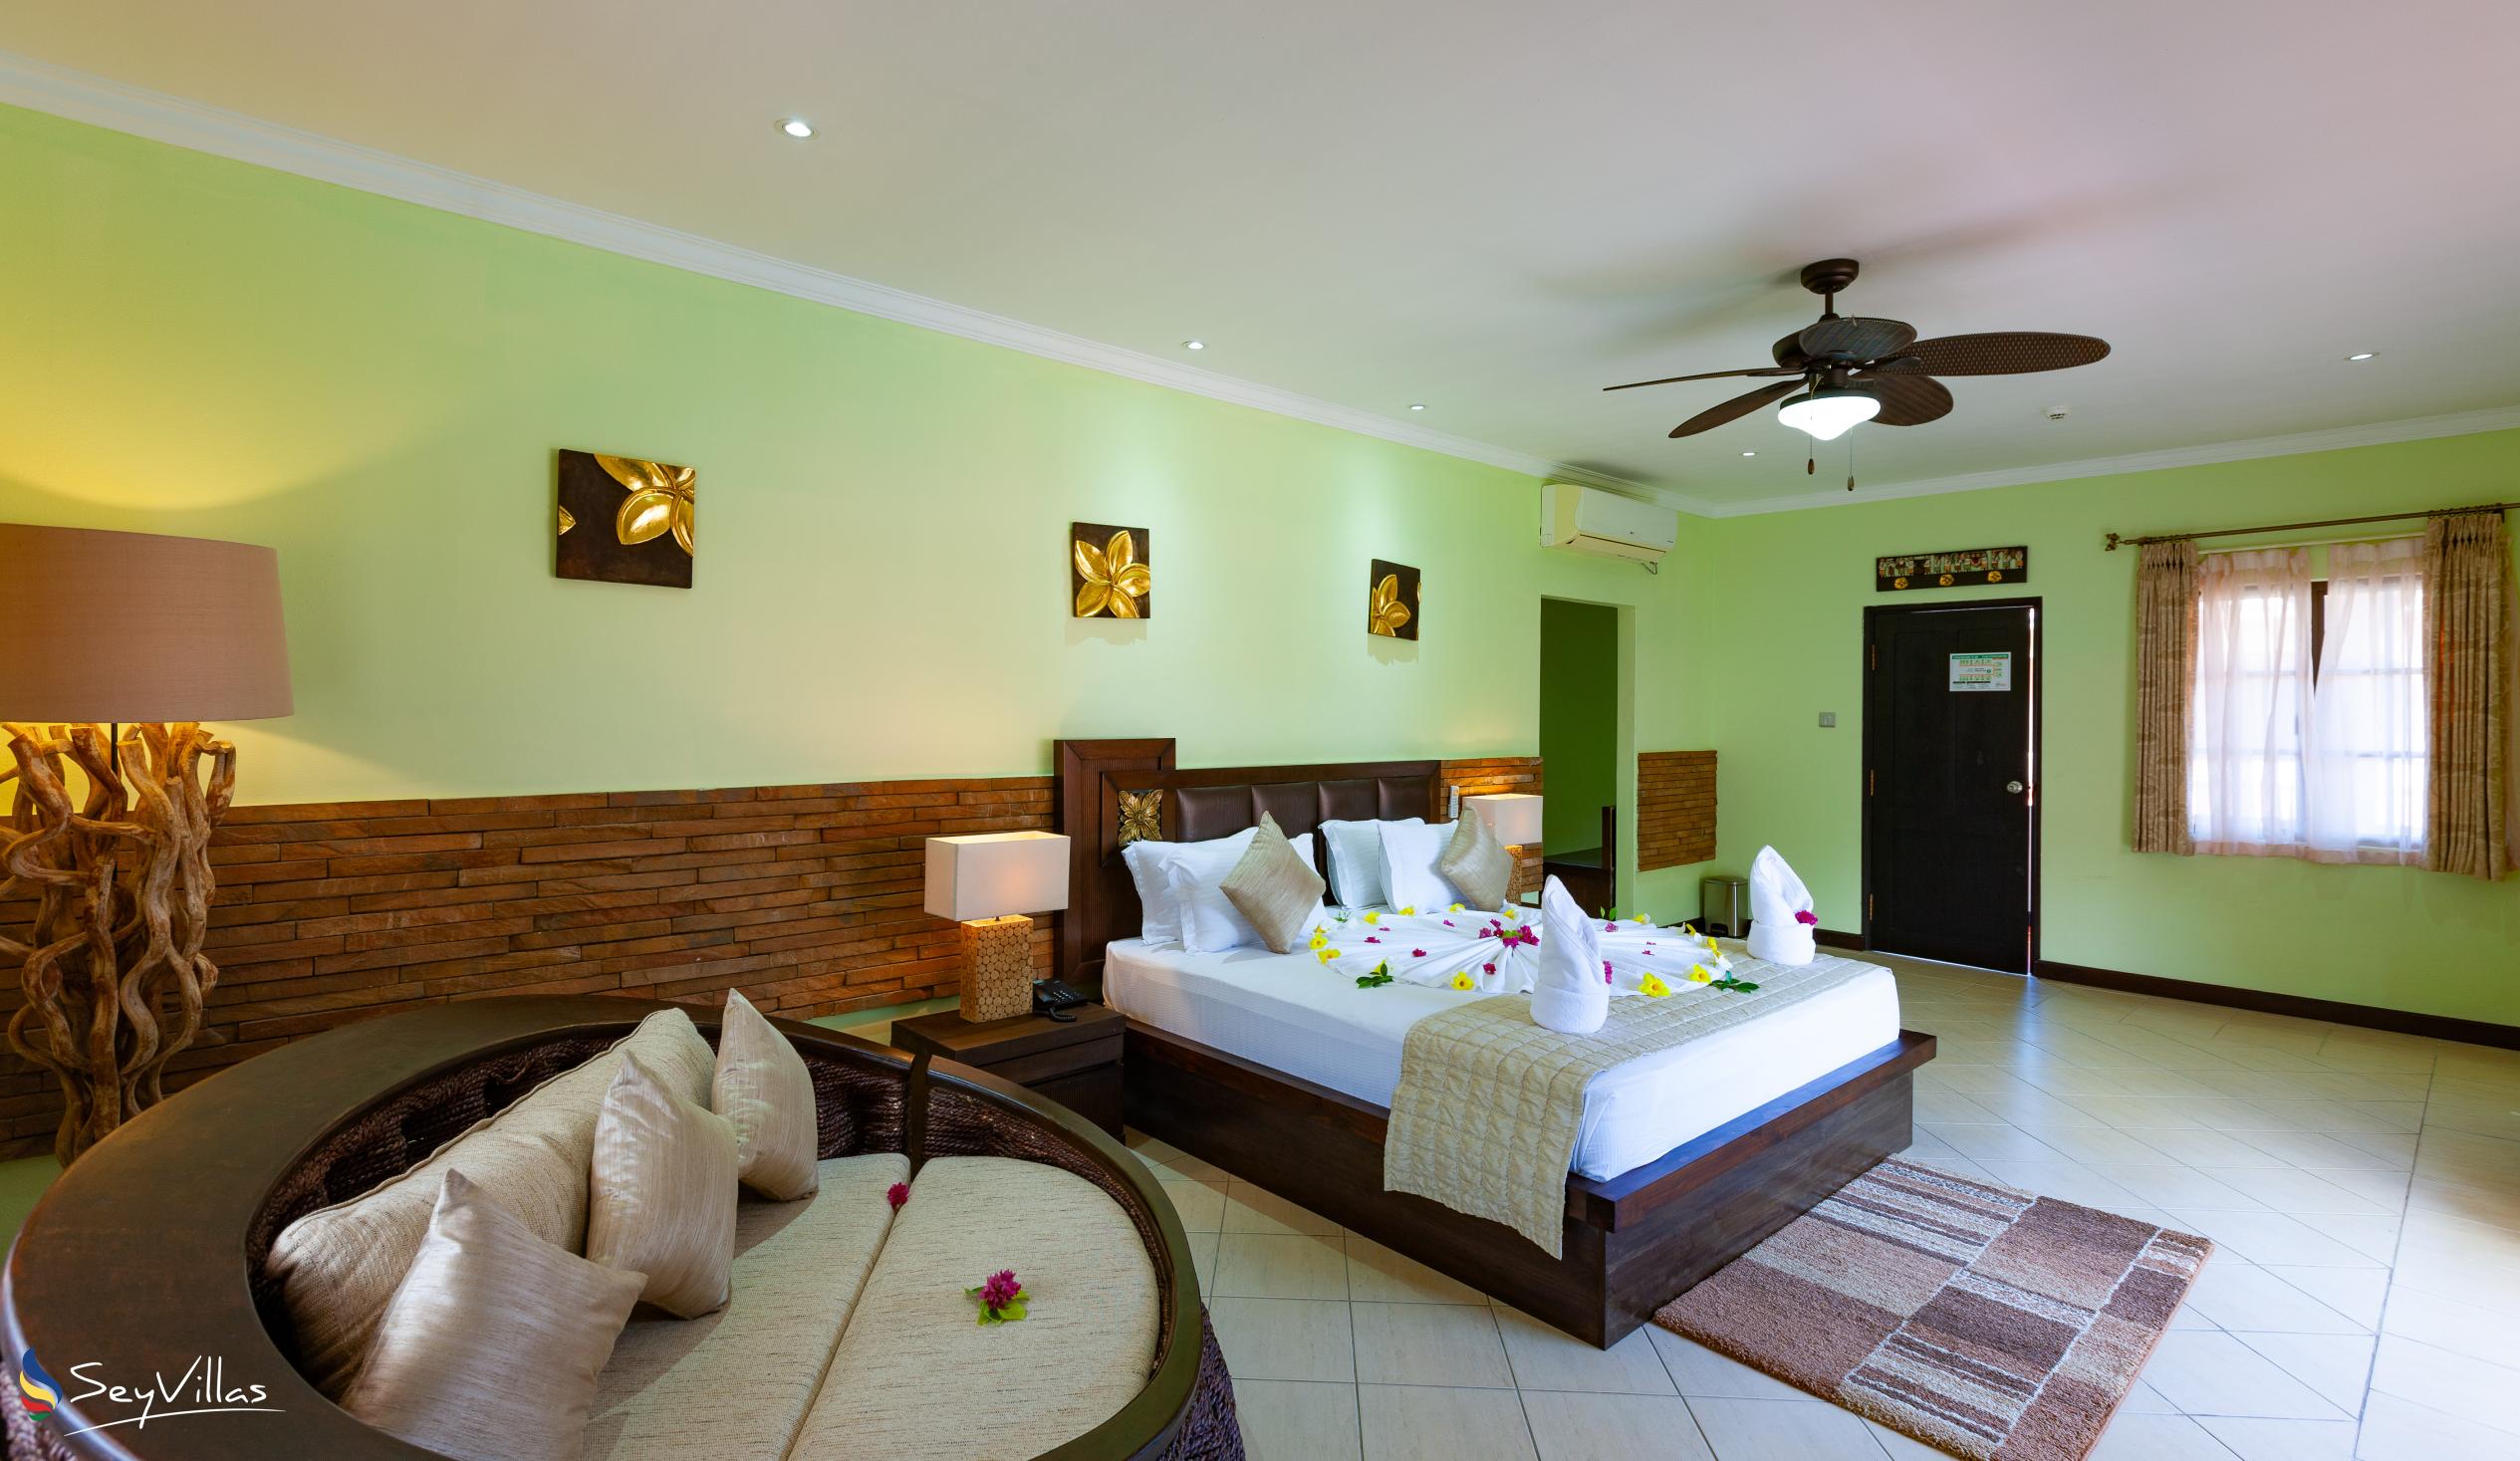 Photo 60: Oasis Hotel, Restaurant & Spa - Deluxe Room - Praslin (Seychelles)